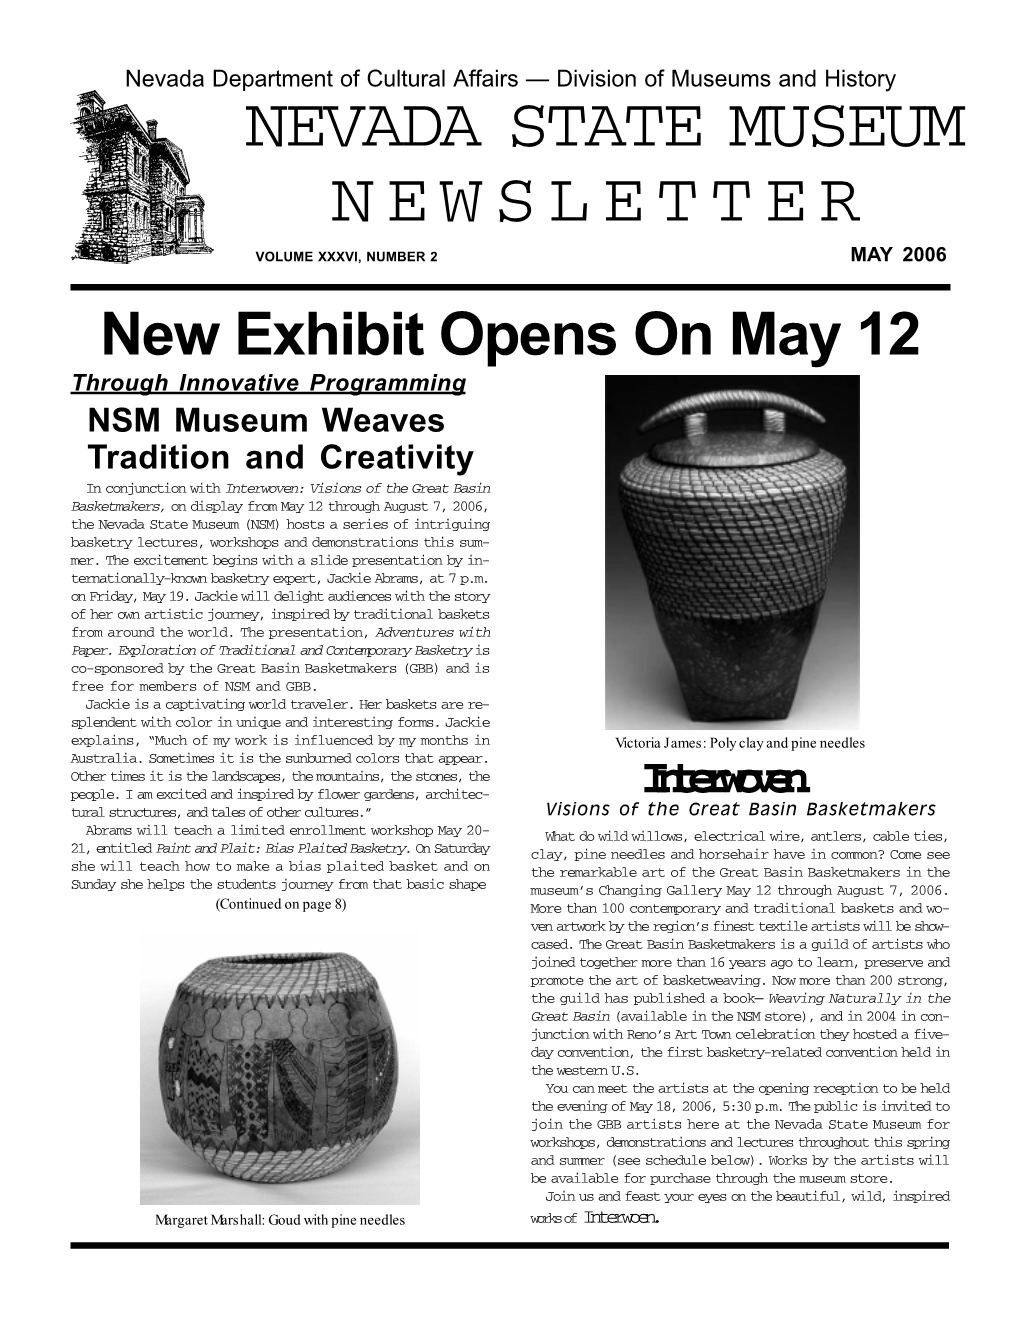 Nevada State Museum Newsletter